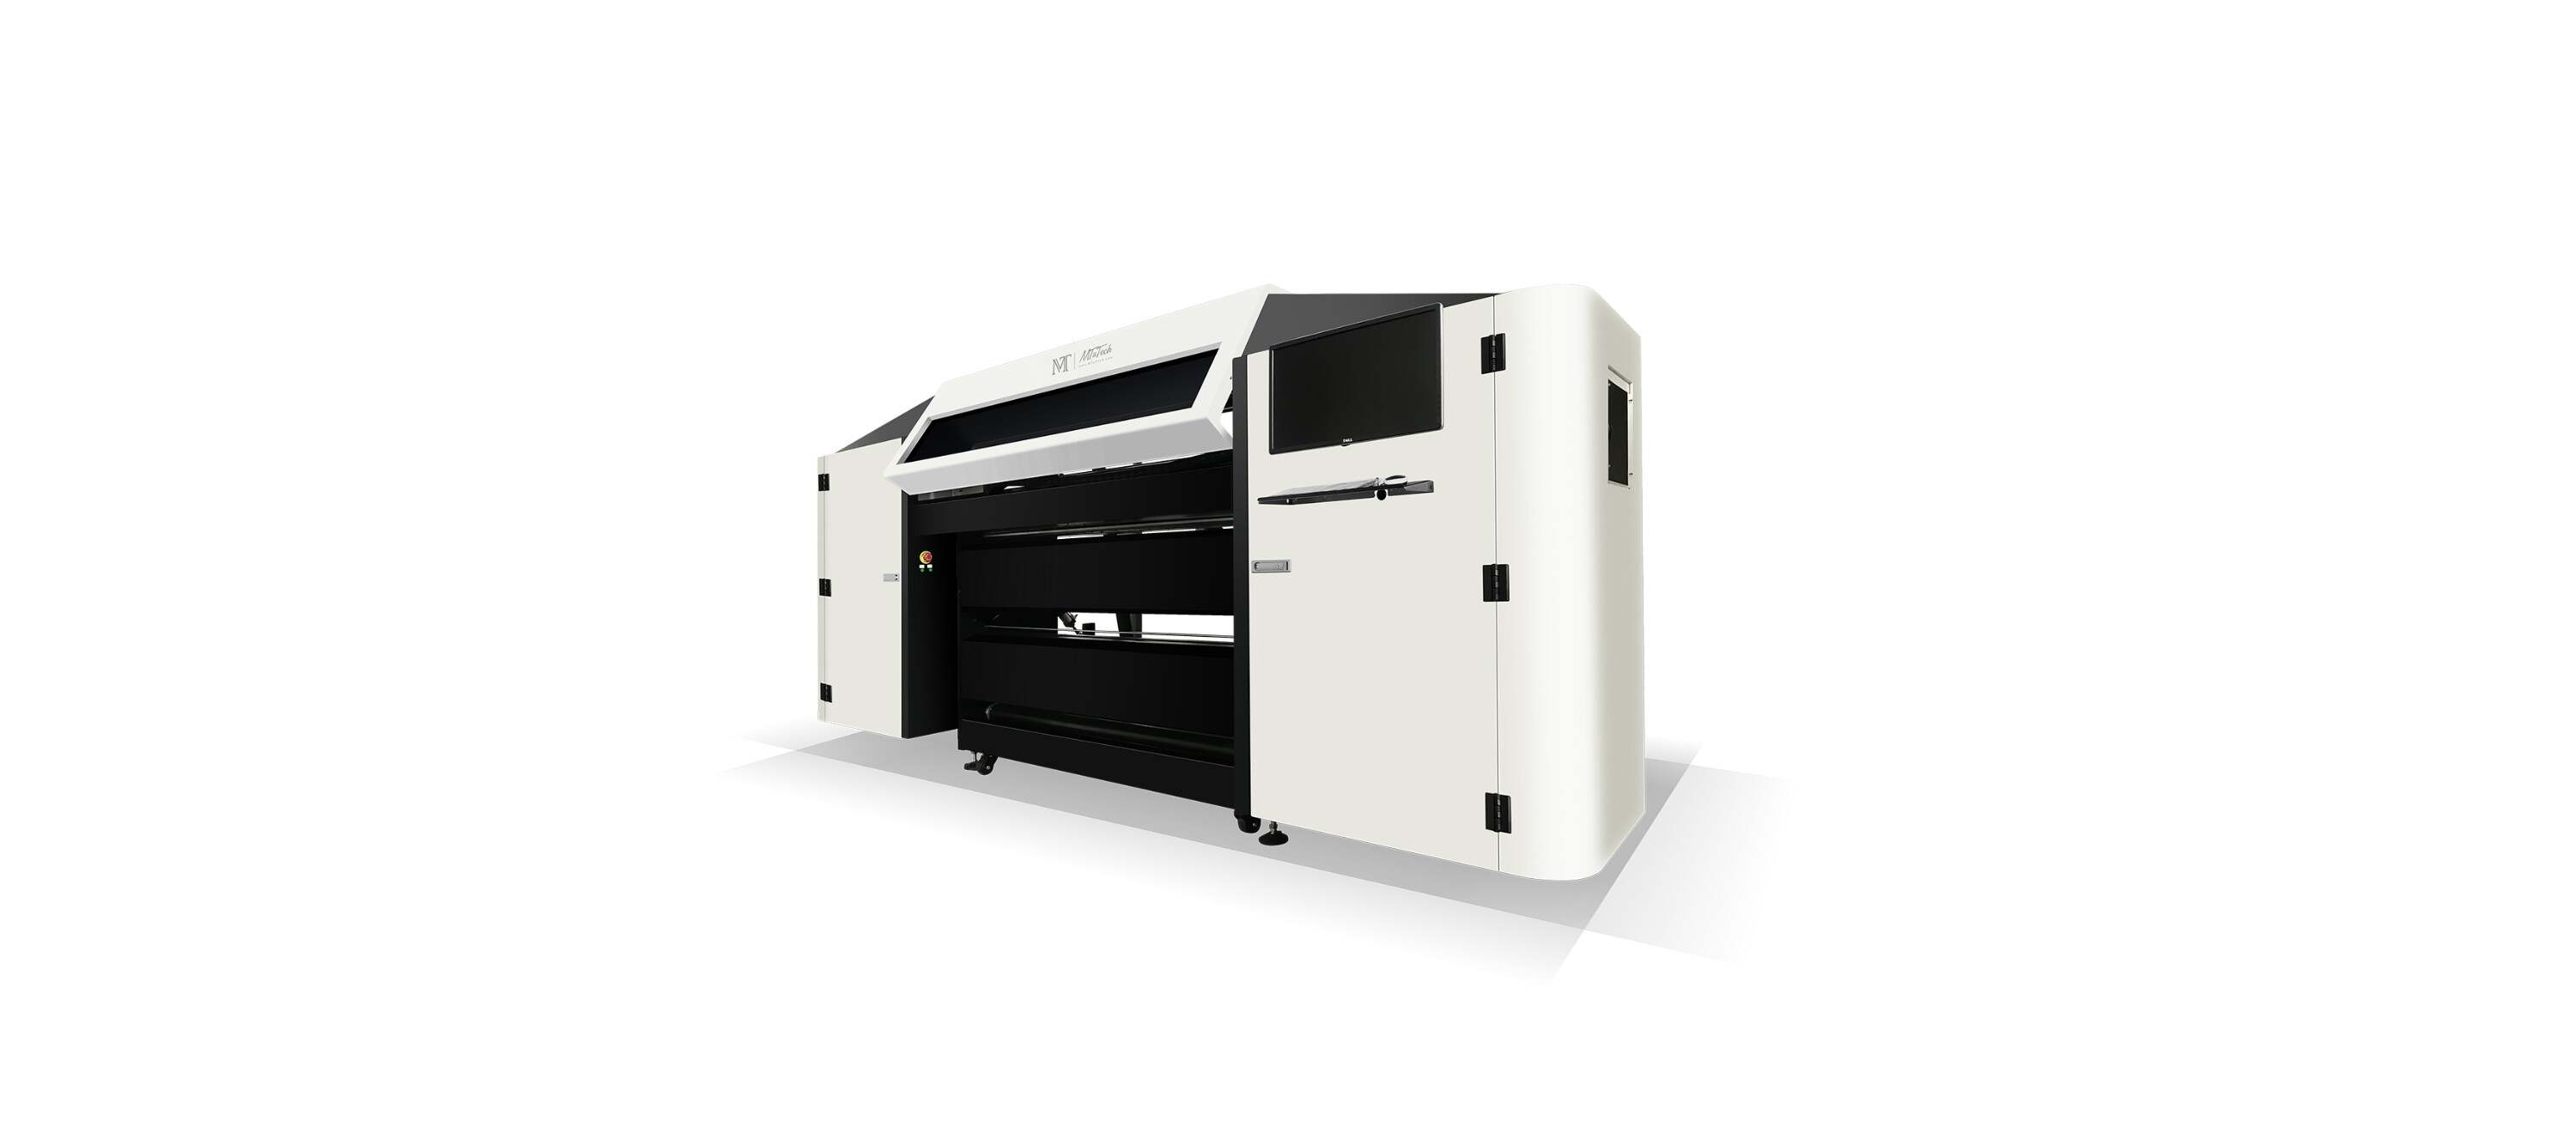 China High-End Digital Textile Printing Flag Printing Machine Large Format Fabric  Printer Printing Digital Machine - China Flag Printing Machine, Flag Printer